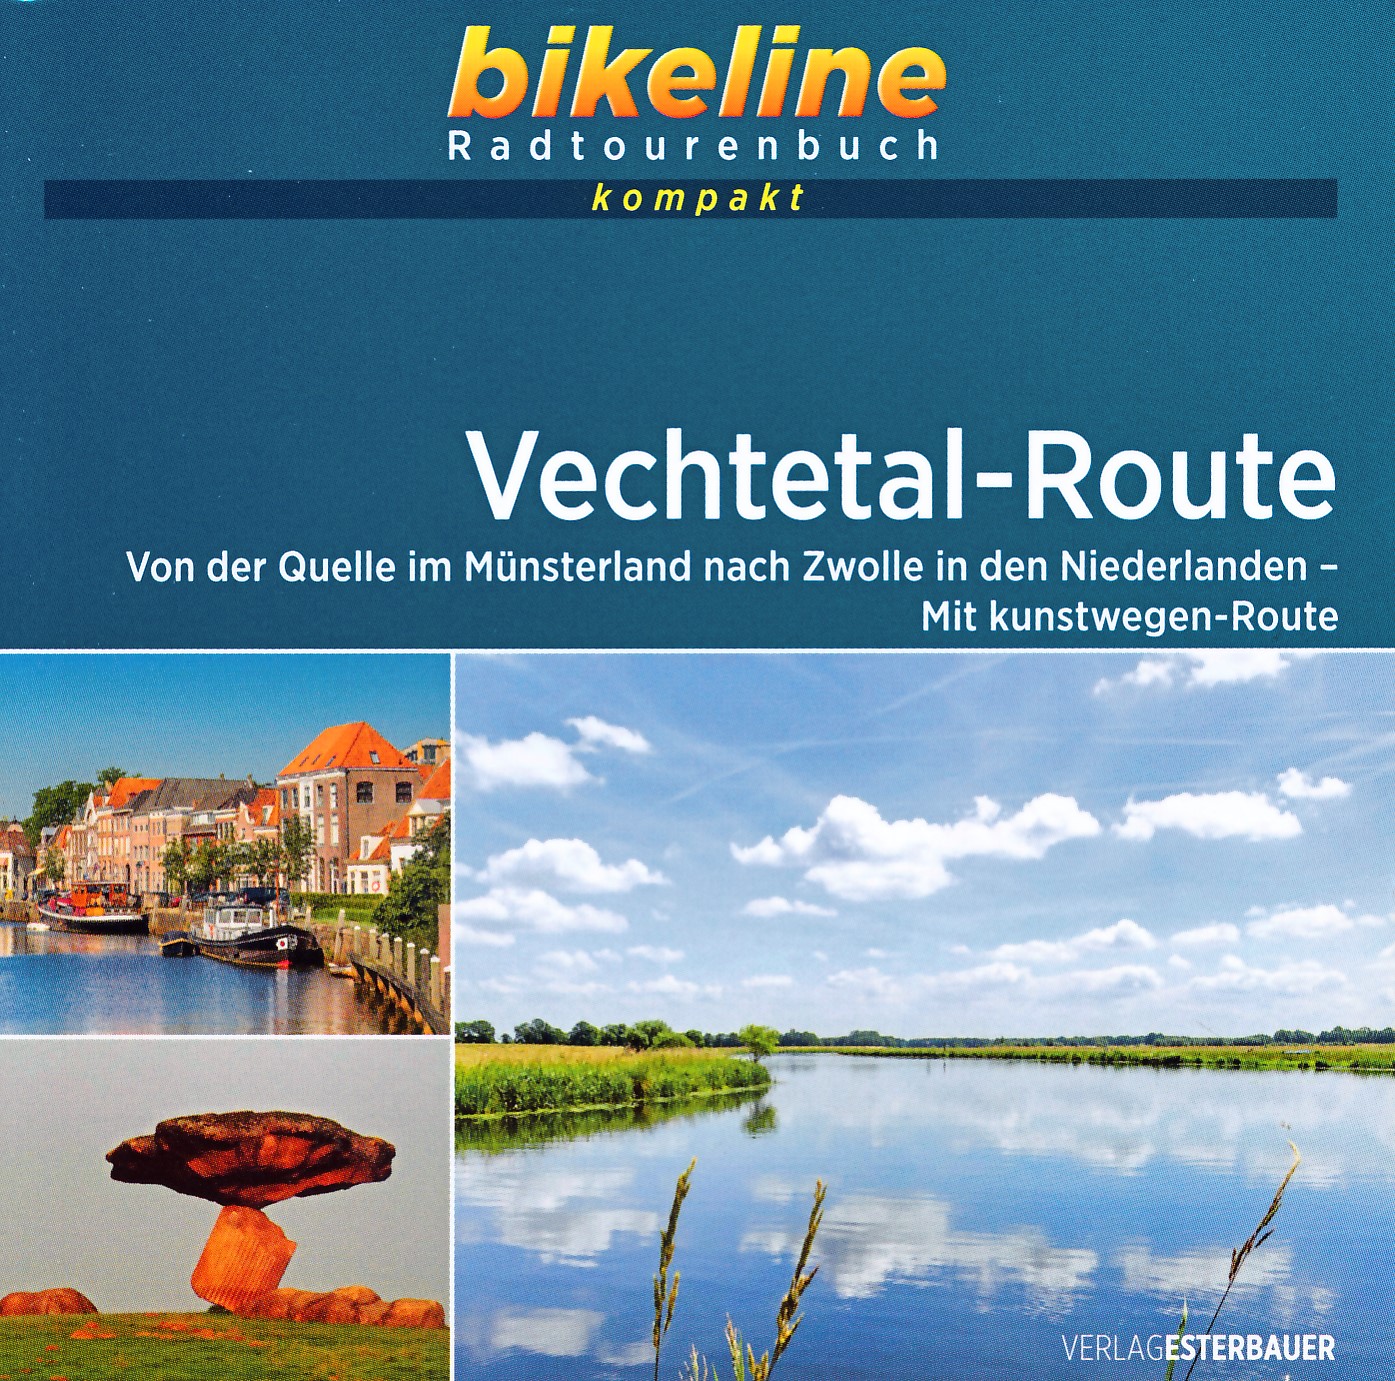 Online bestellen: Fietsgids Bikeline Radtourenbuch kompakt Vechtetalroute - Vechtdalroute | Esterbauer